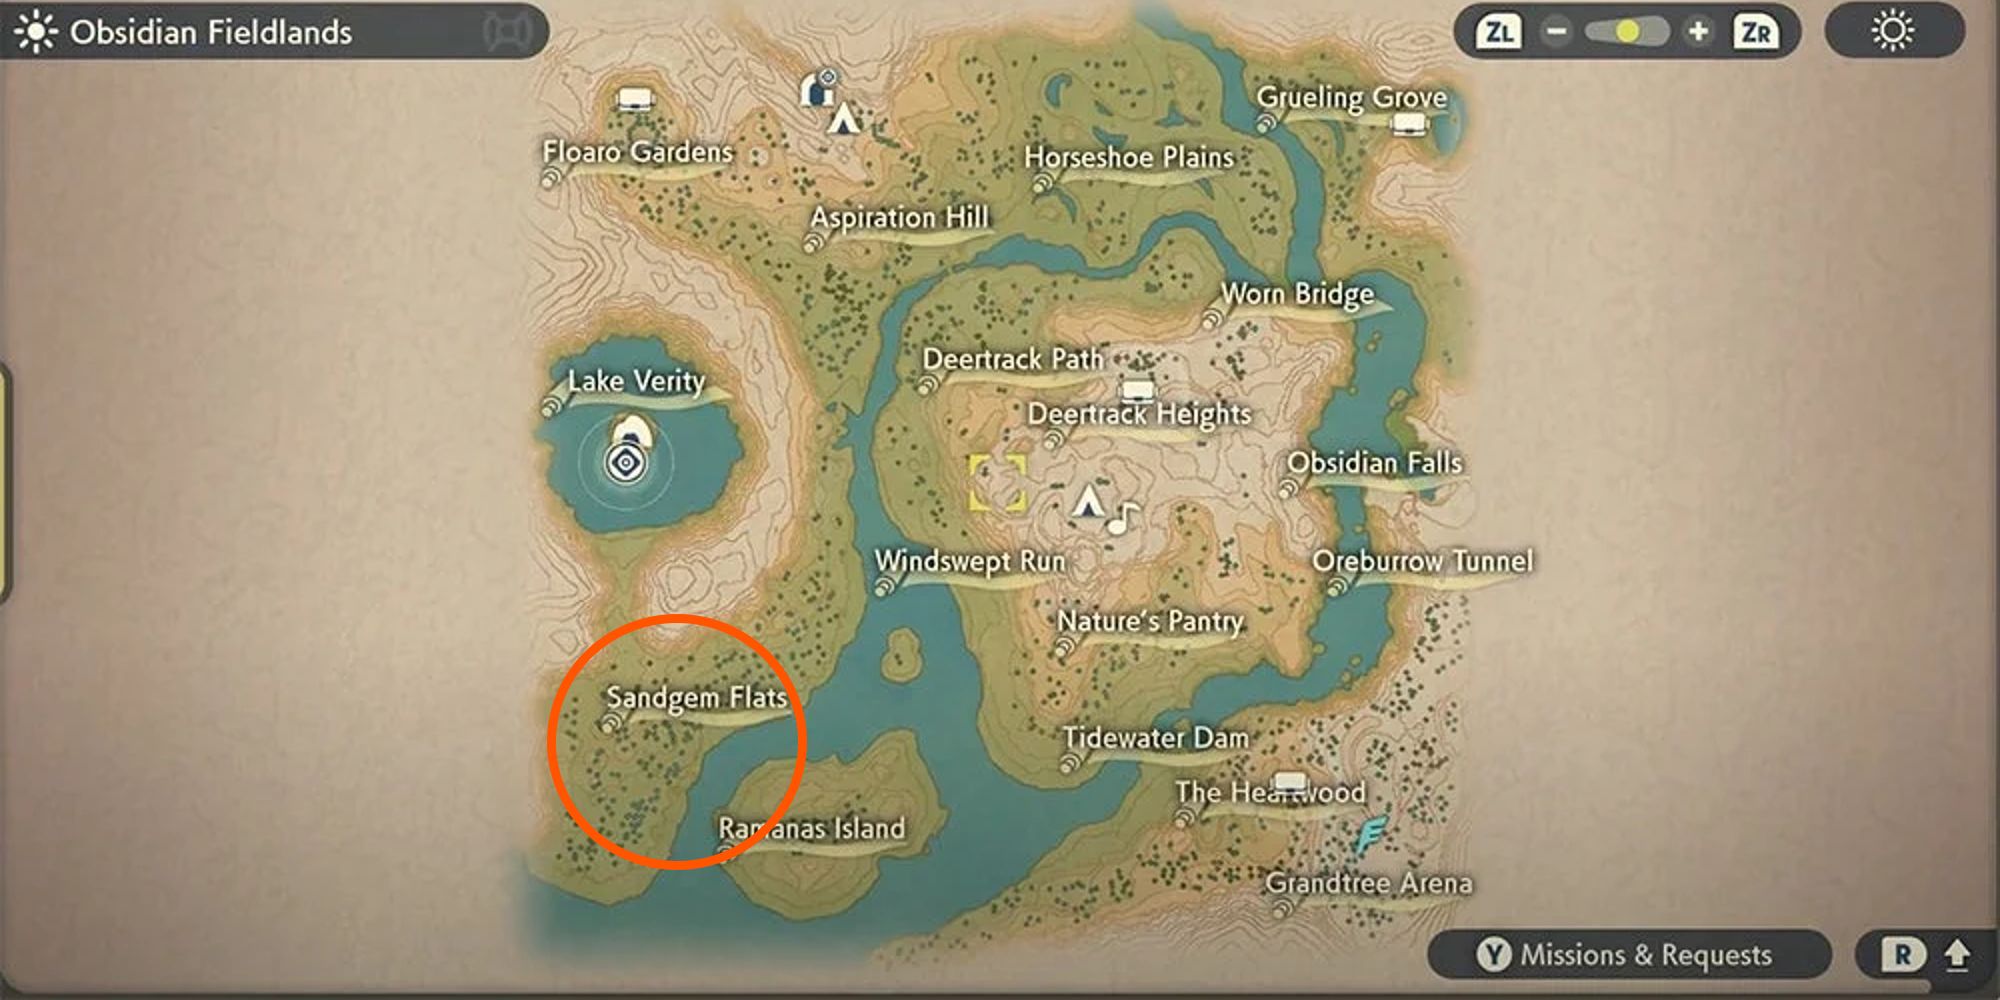 sandgem flats location on map circled